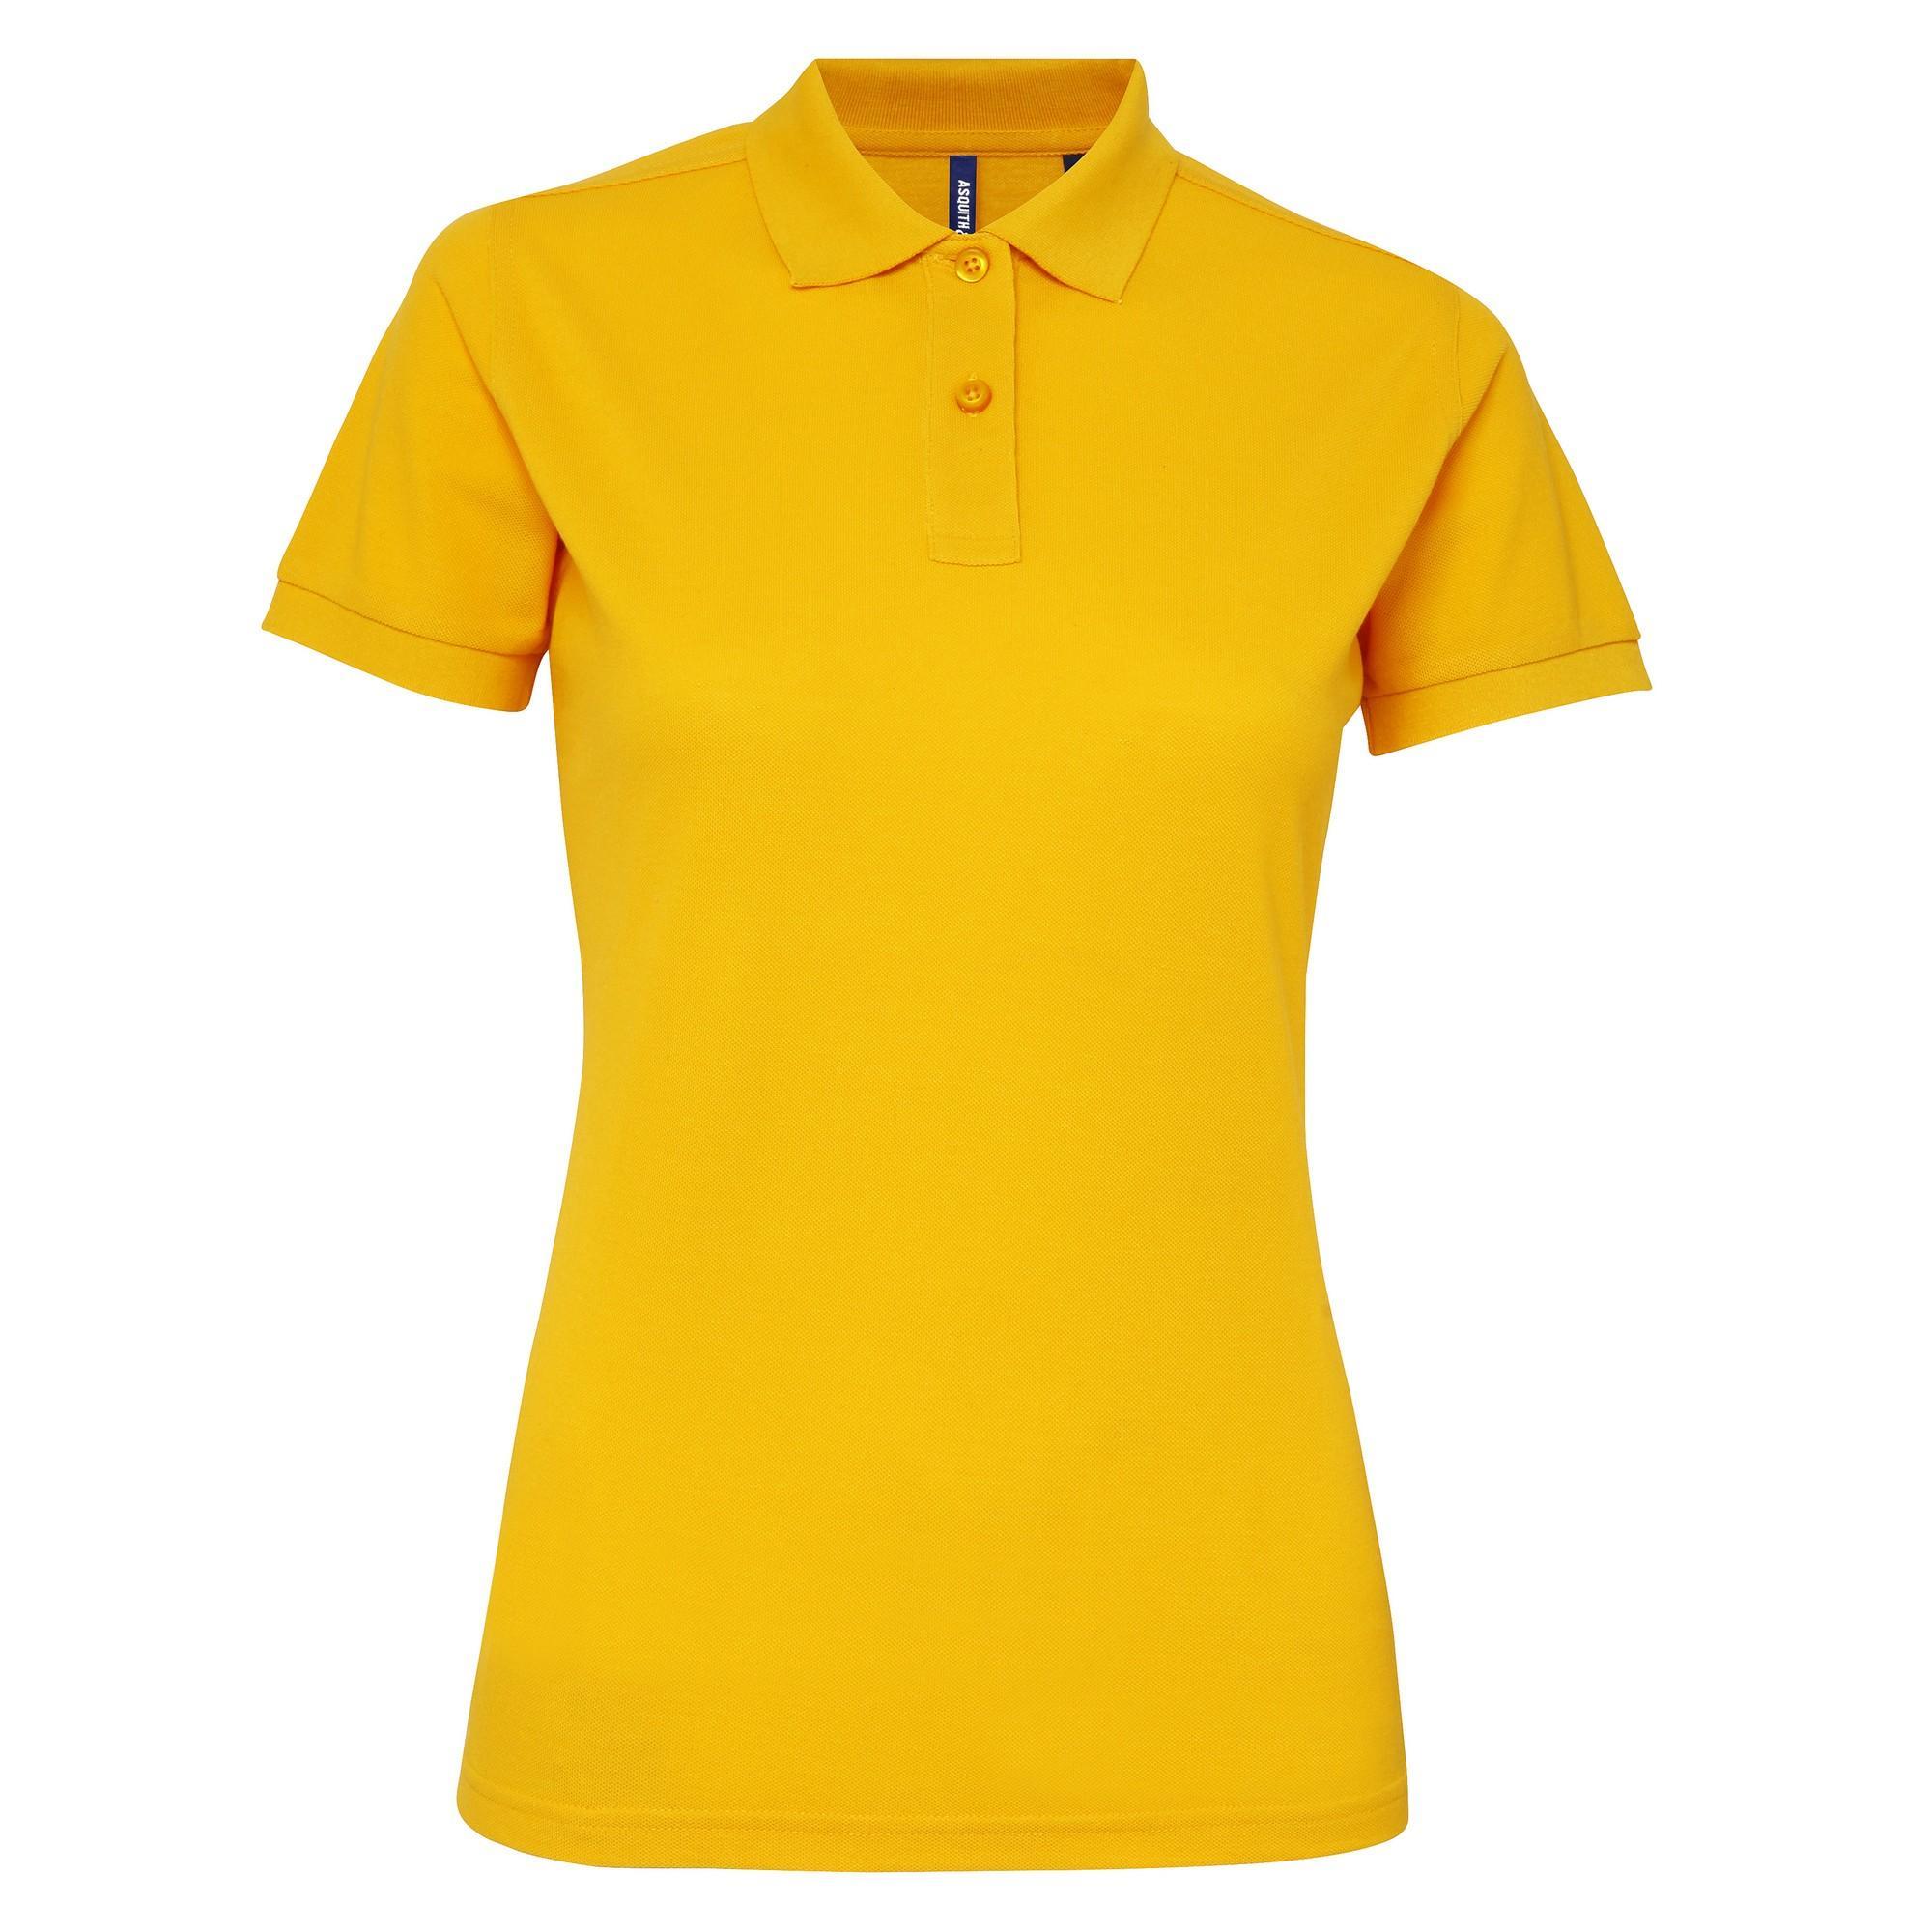 Asquith & Fox Womens/Ladies Short Sleeve Performance Blend Polo Shirt (Sunflower) (L)